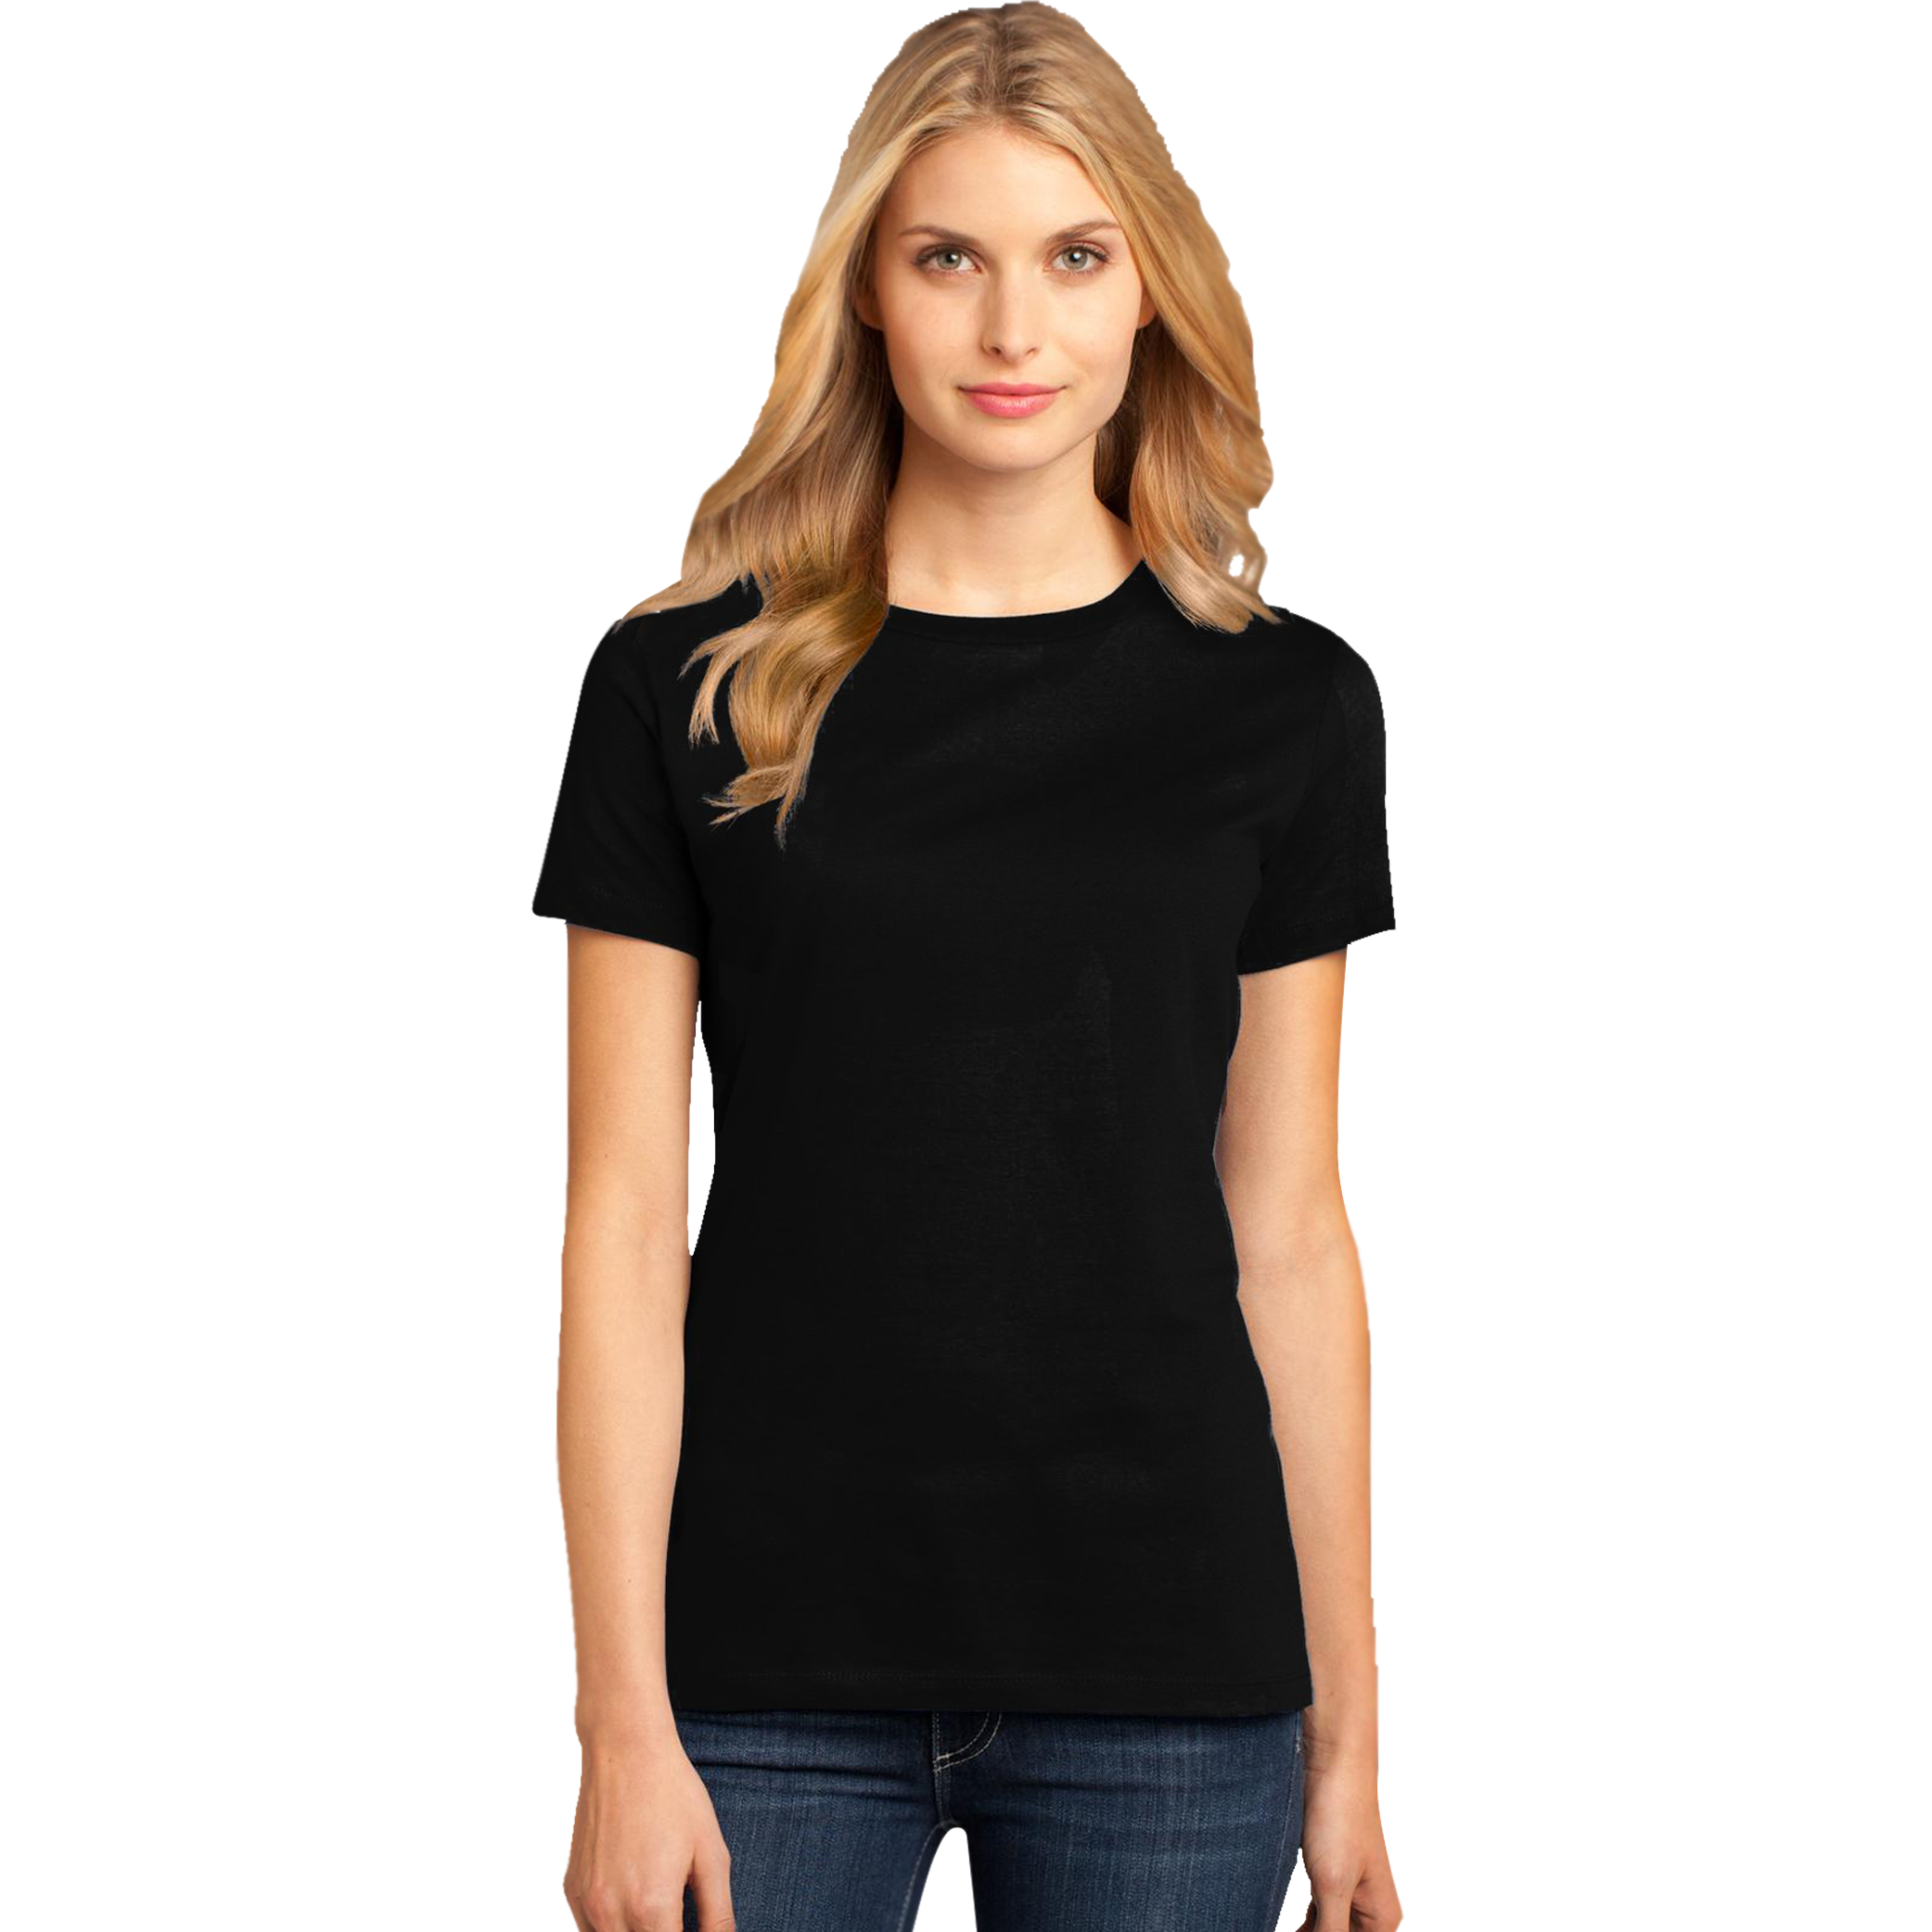 Download Women's R-Neck T-shirts | T-shirt Loot - Customized T-shirts India | Design own T-shirt